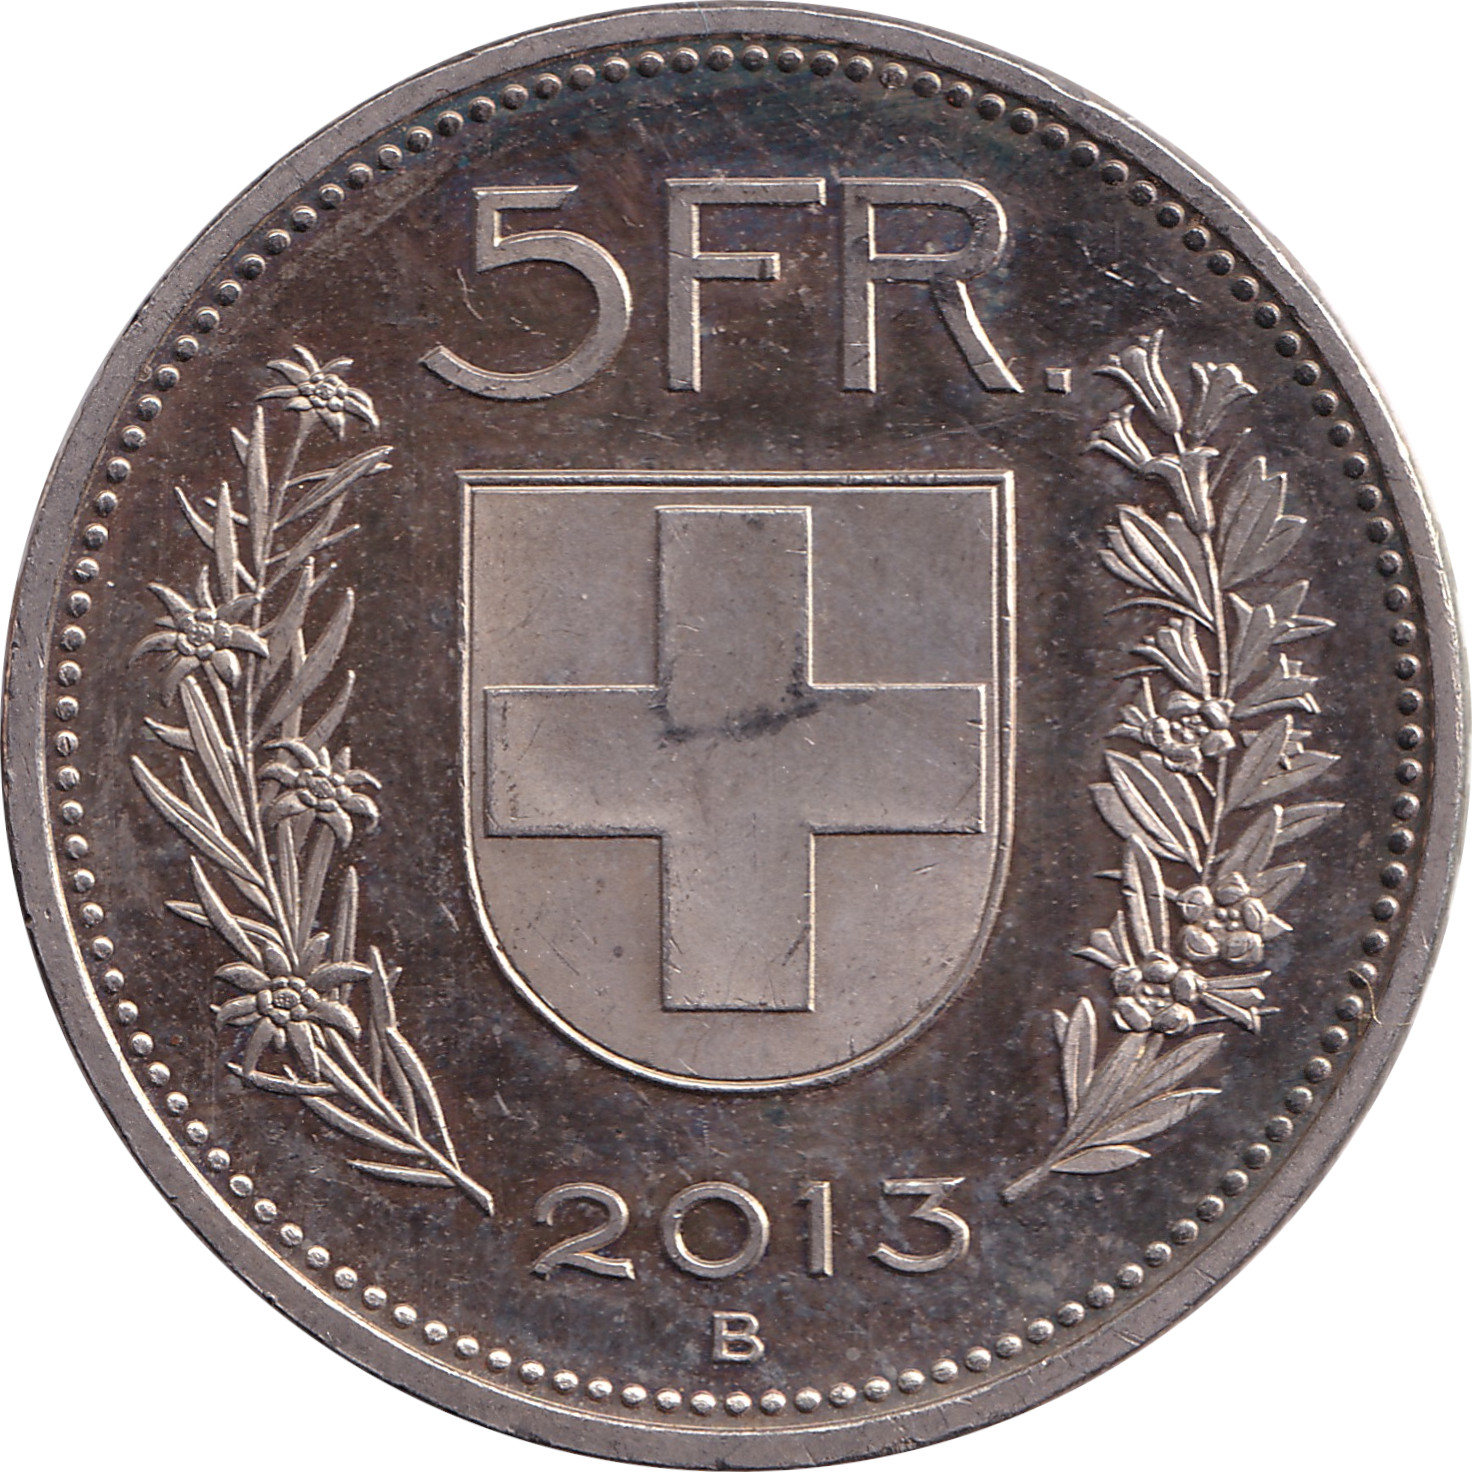 5 francs - Berger - Petit module